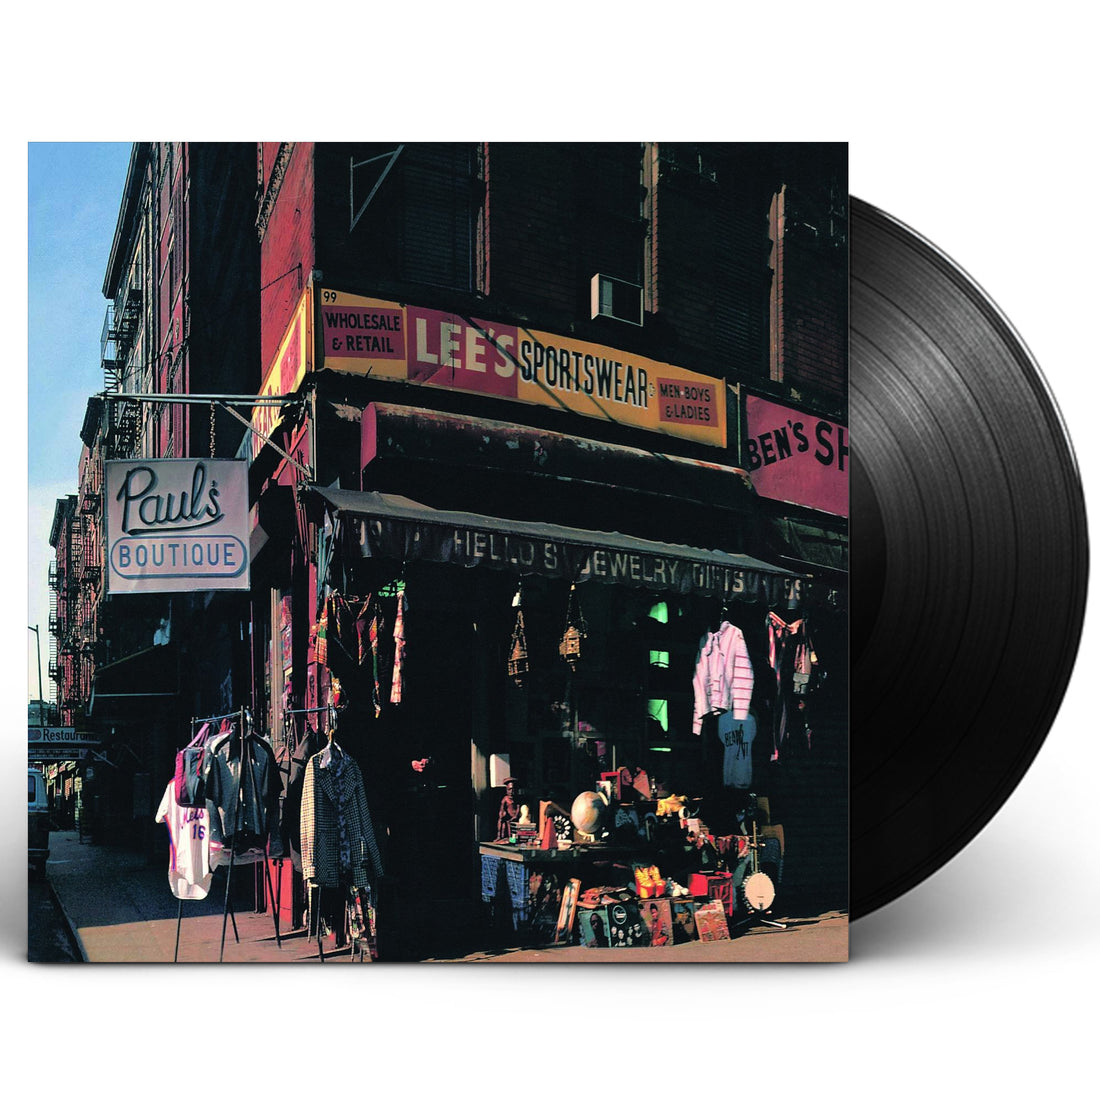 Beastie Boys "Paul's Boutique" (20th Anniversary Edition) LP 180 Gram Vinyl